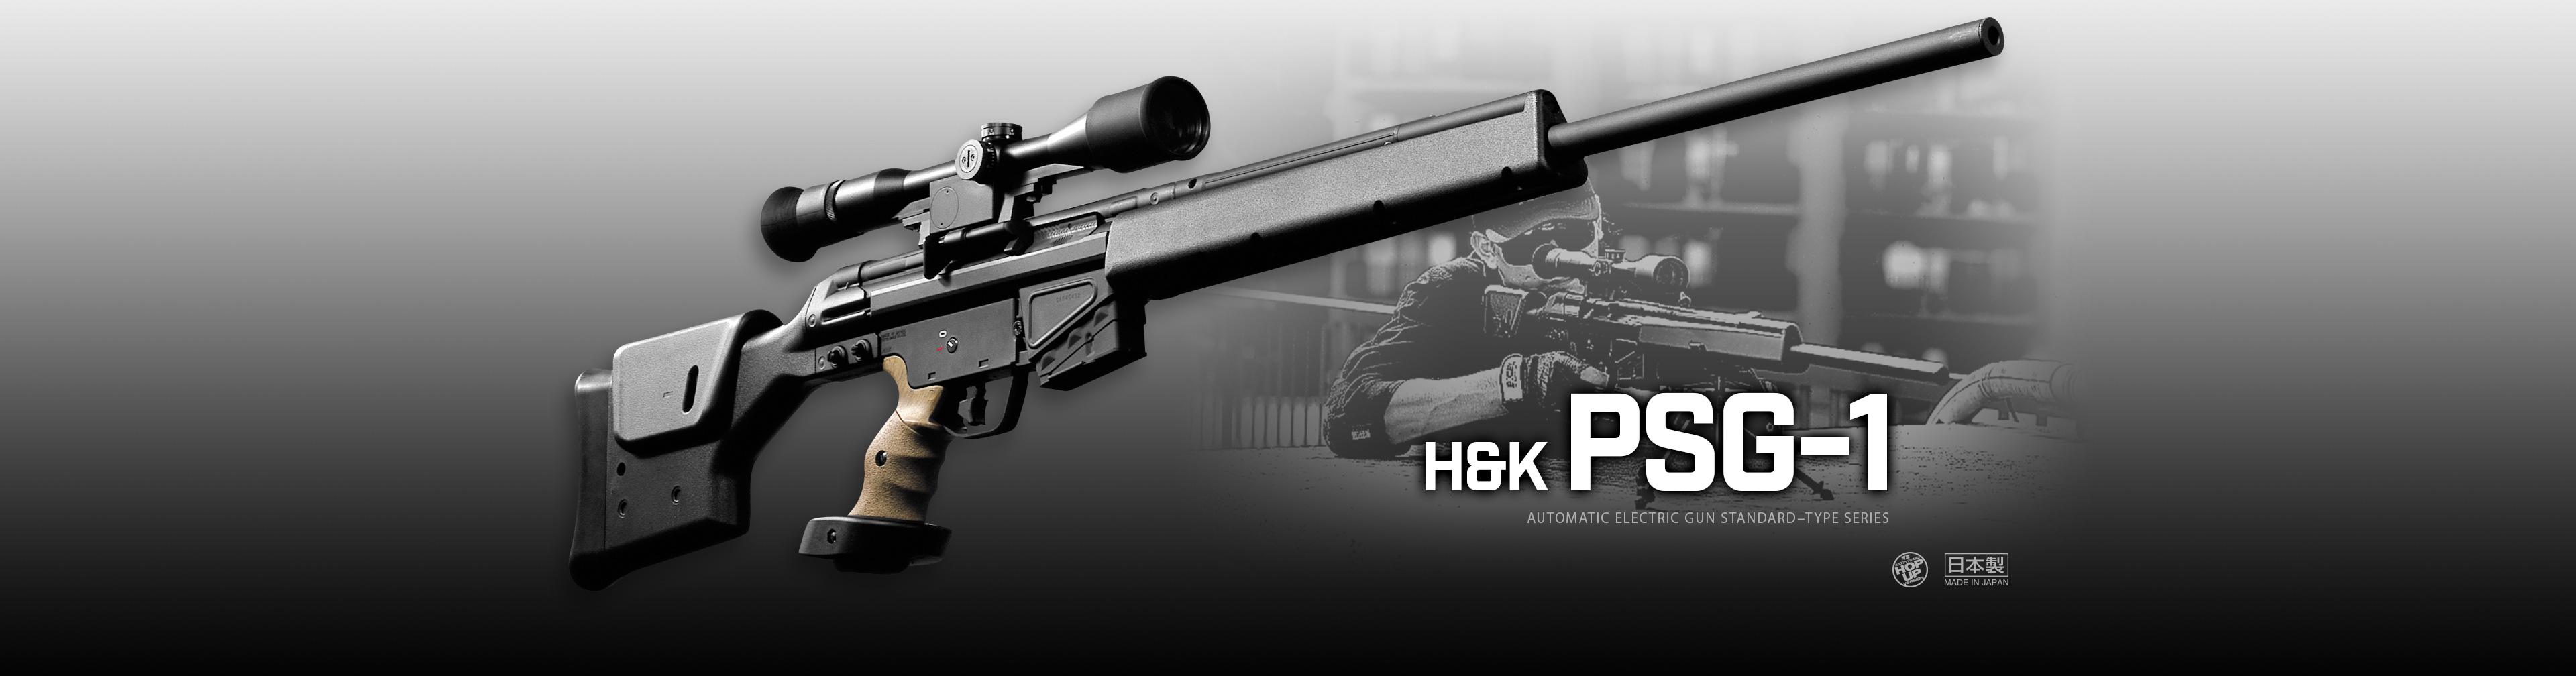 H&K PSG-1